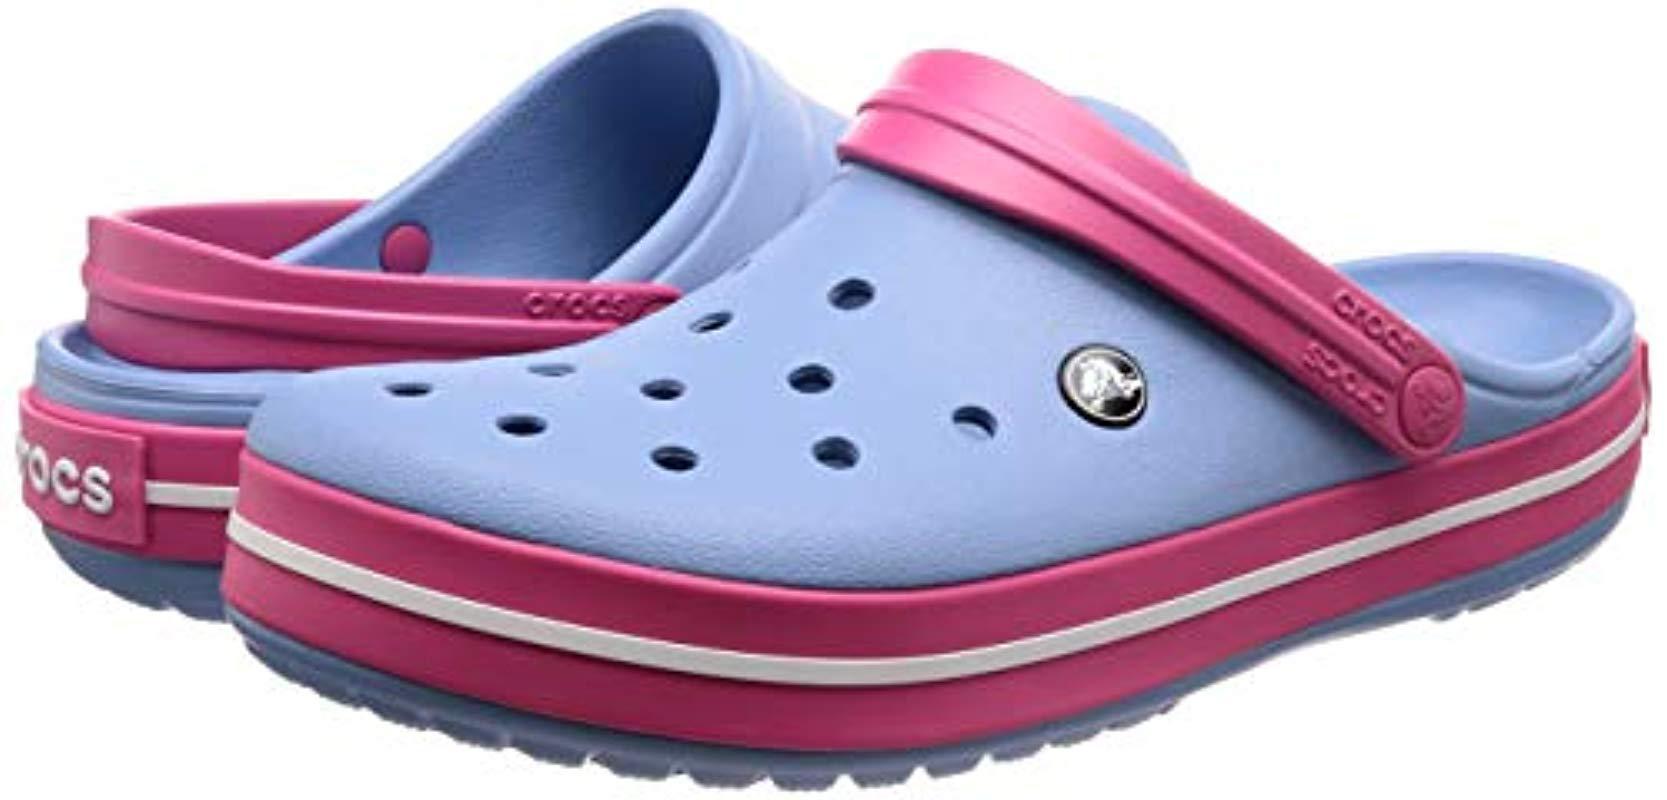 crocs chambray blue paradise pink